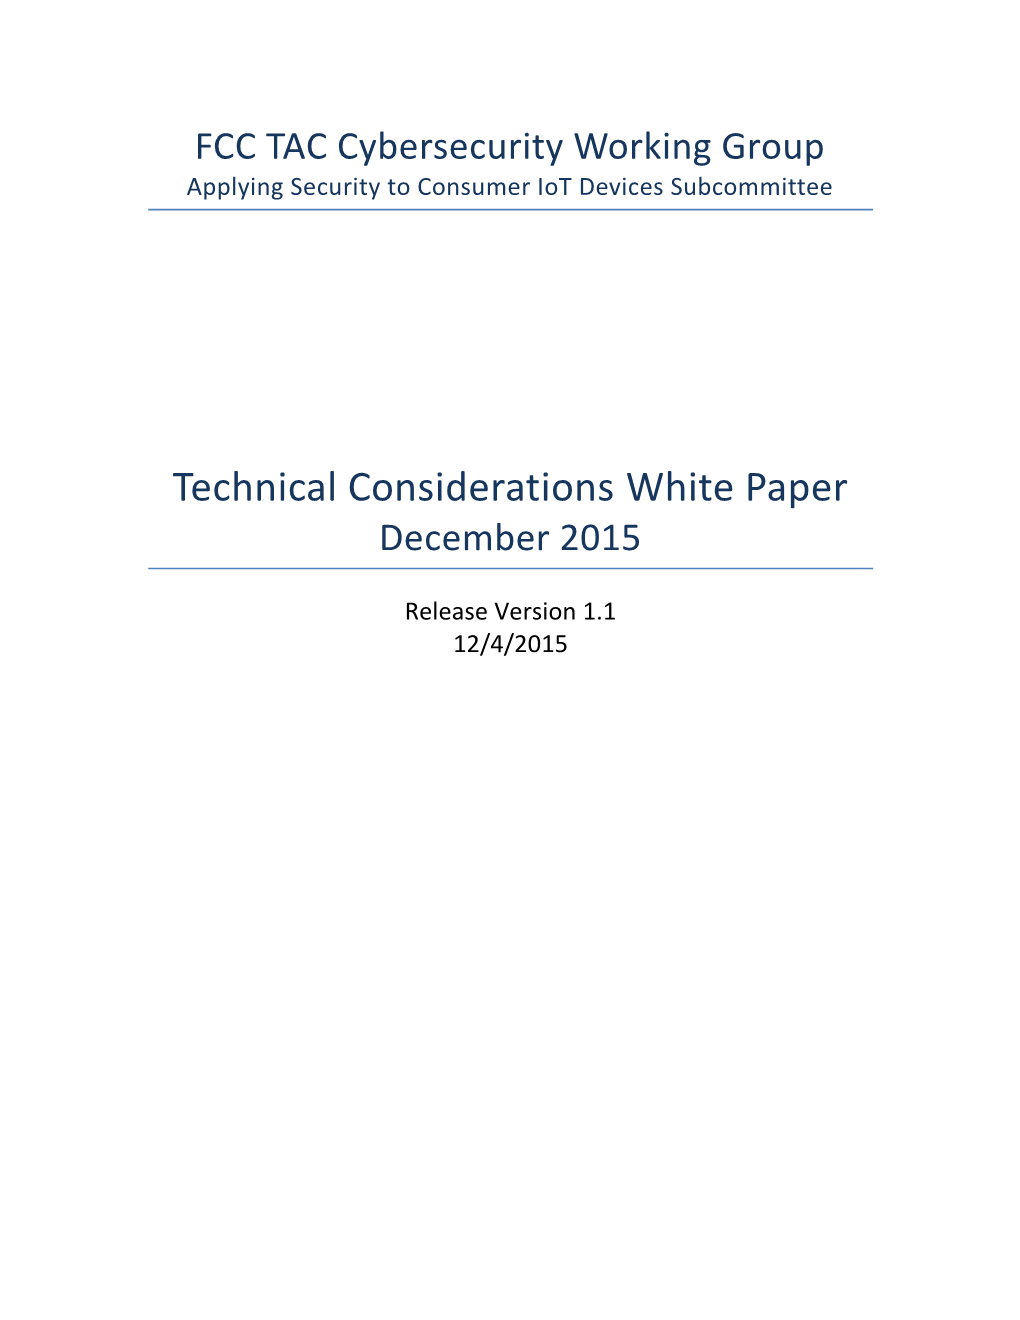 FCC-TAC-Cyber-Iot-White-Paper